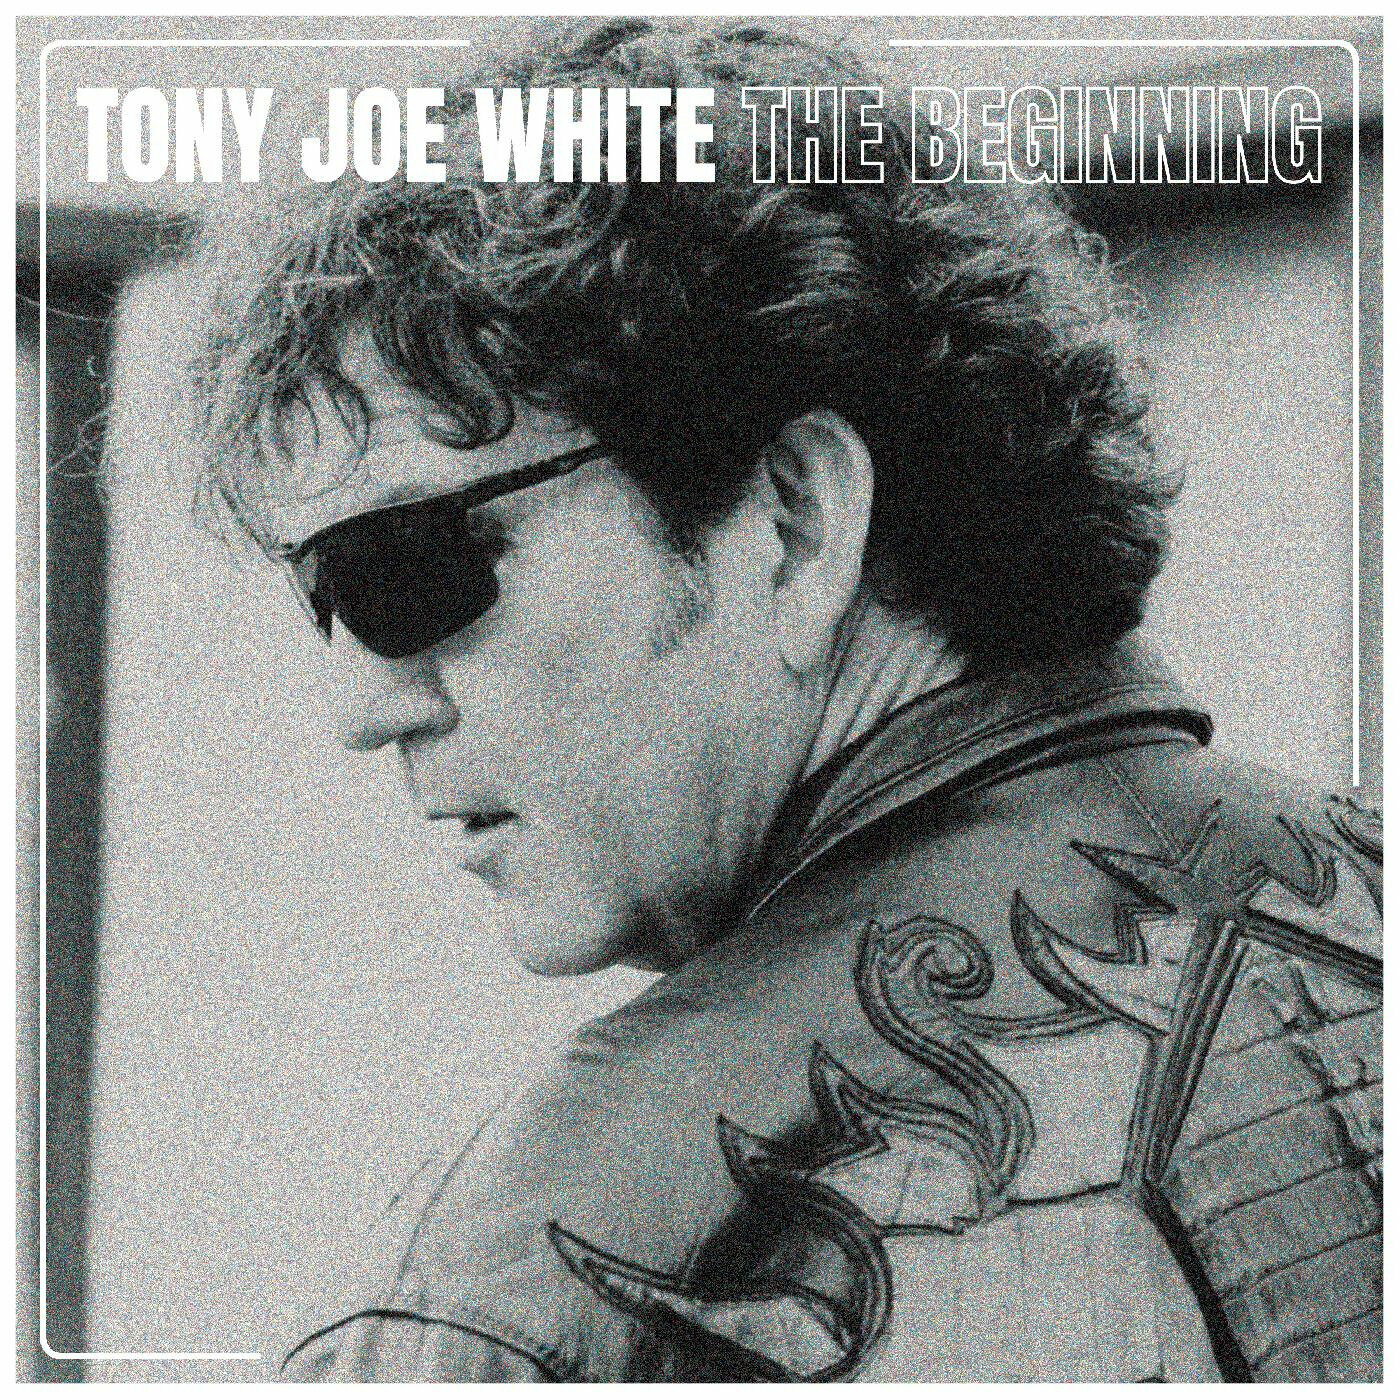 Vinylskiva Tony Joe White - The Beginning (LP)